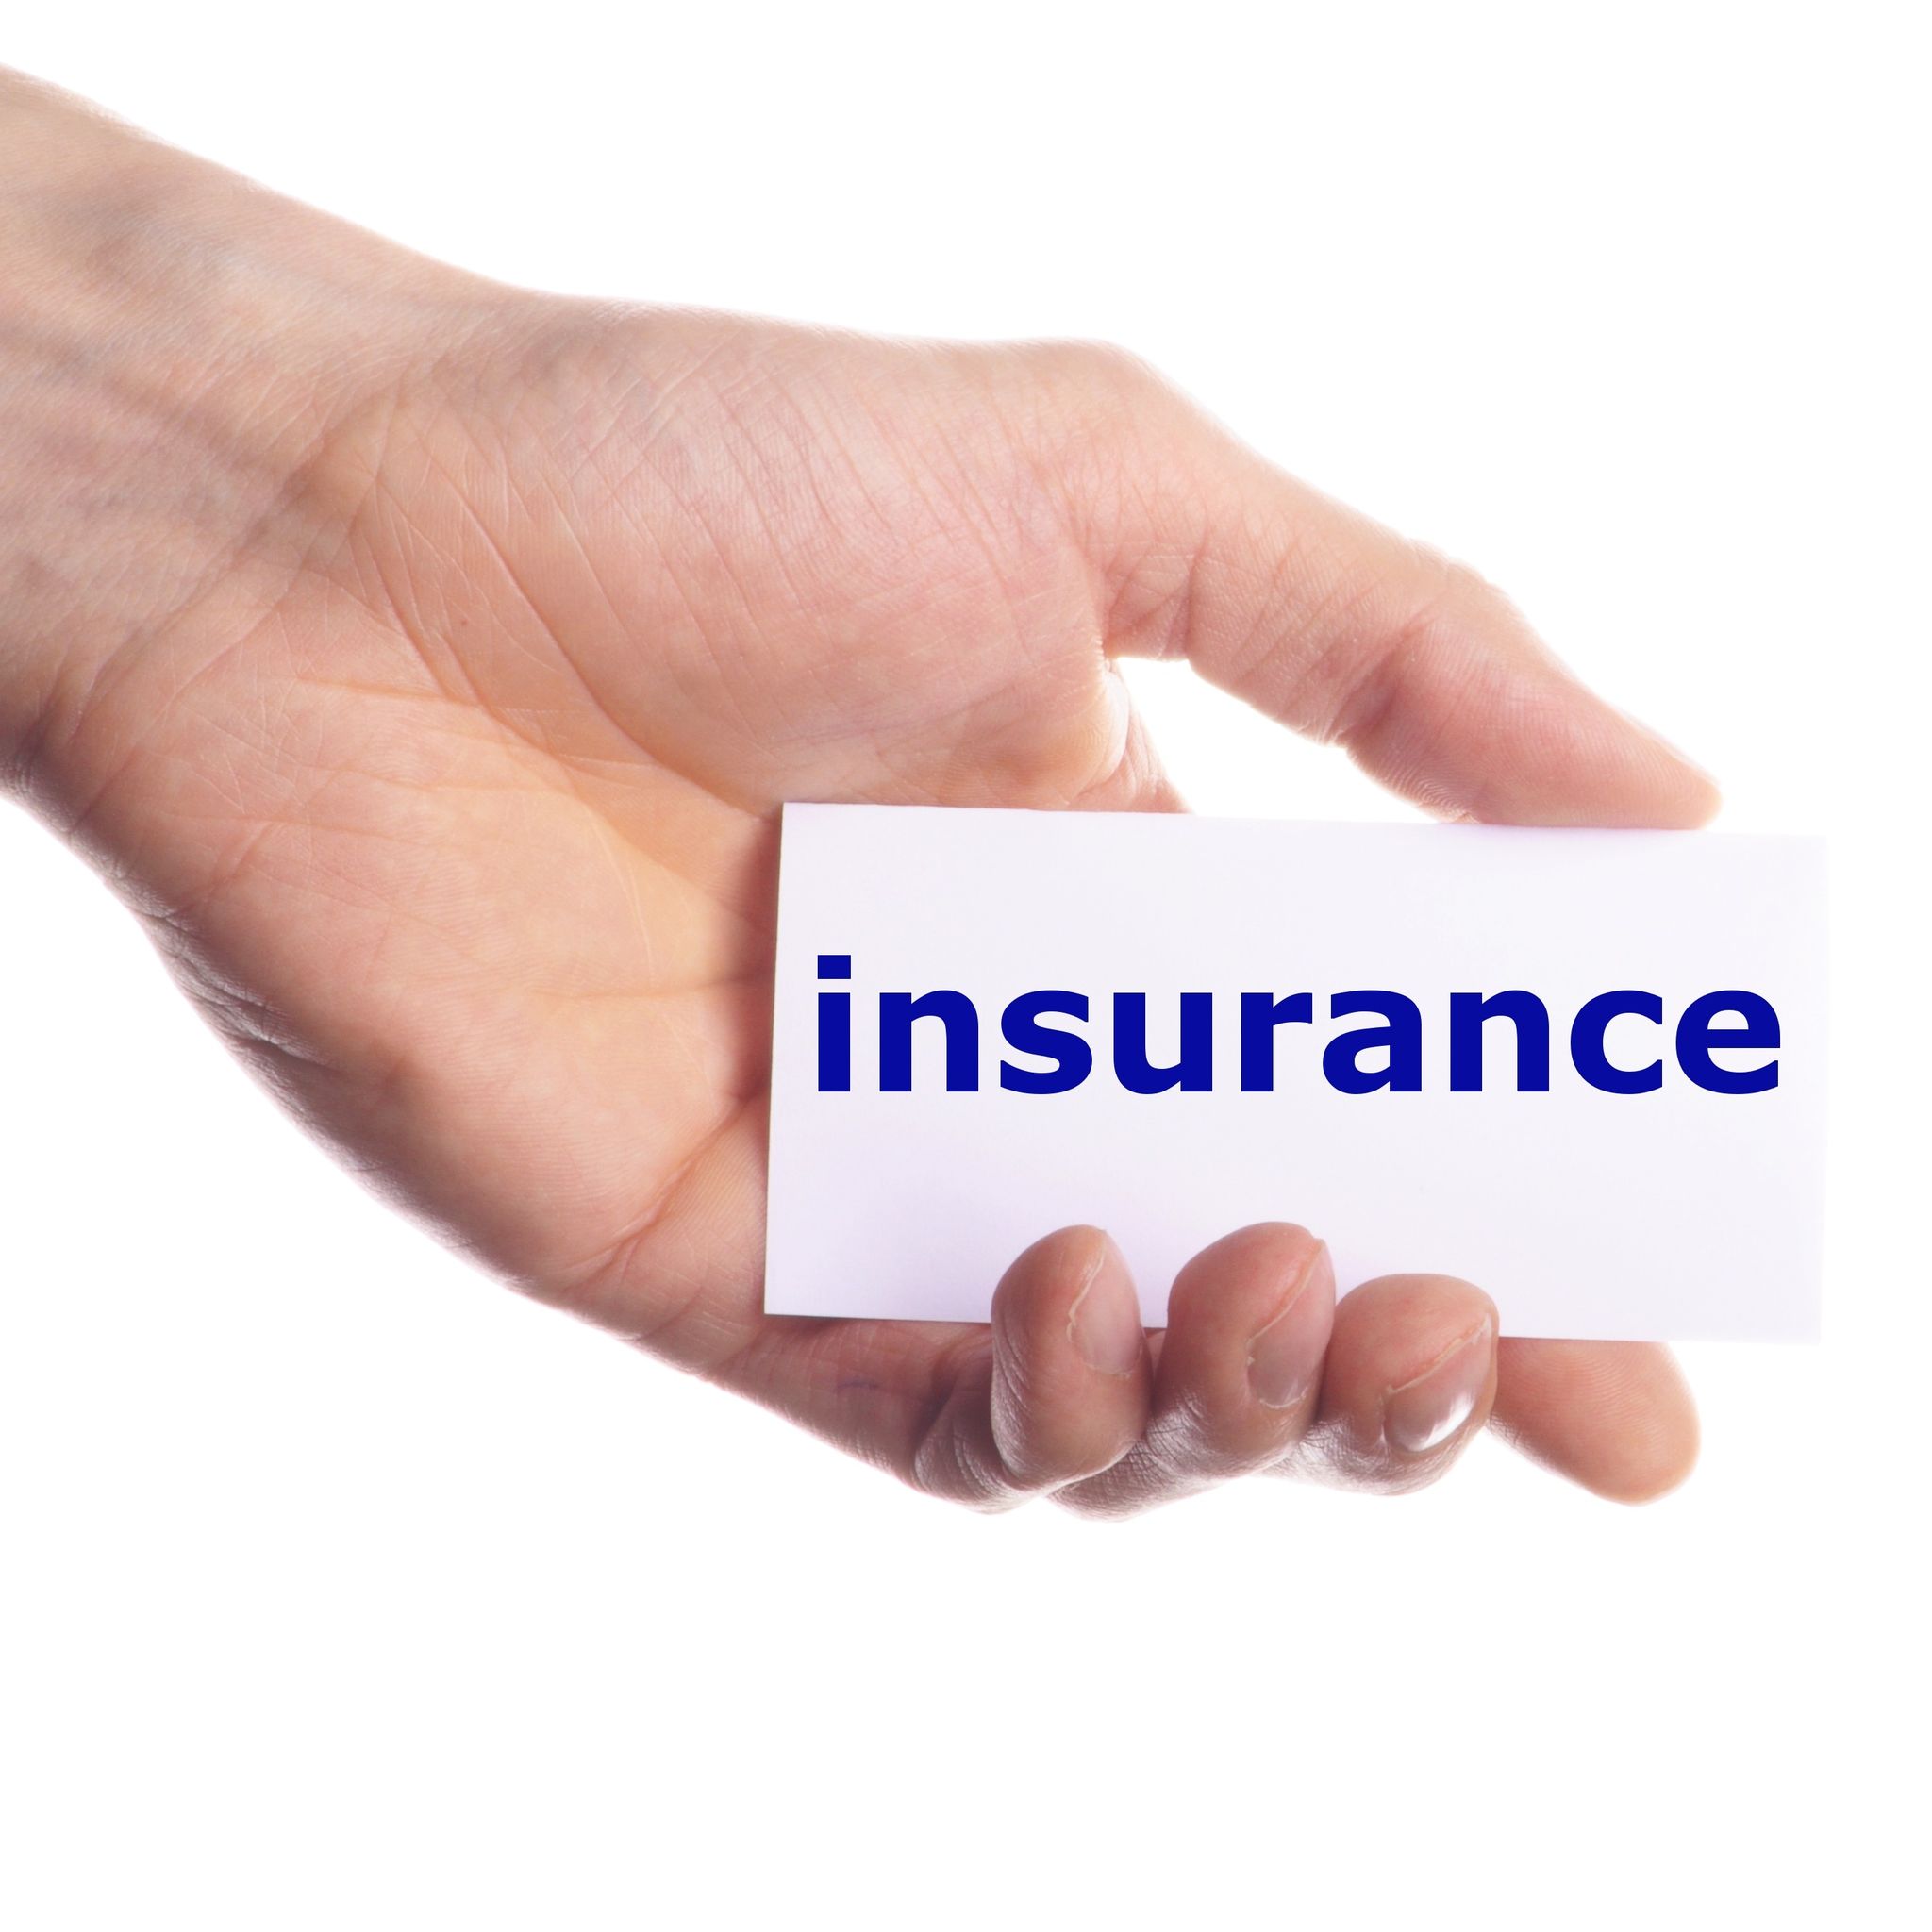 Car Insurance Agency in Miami, FL, Talks Car Insurance Fraud